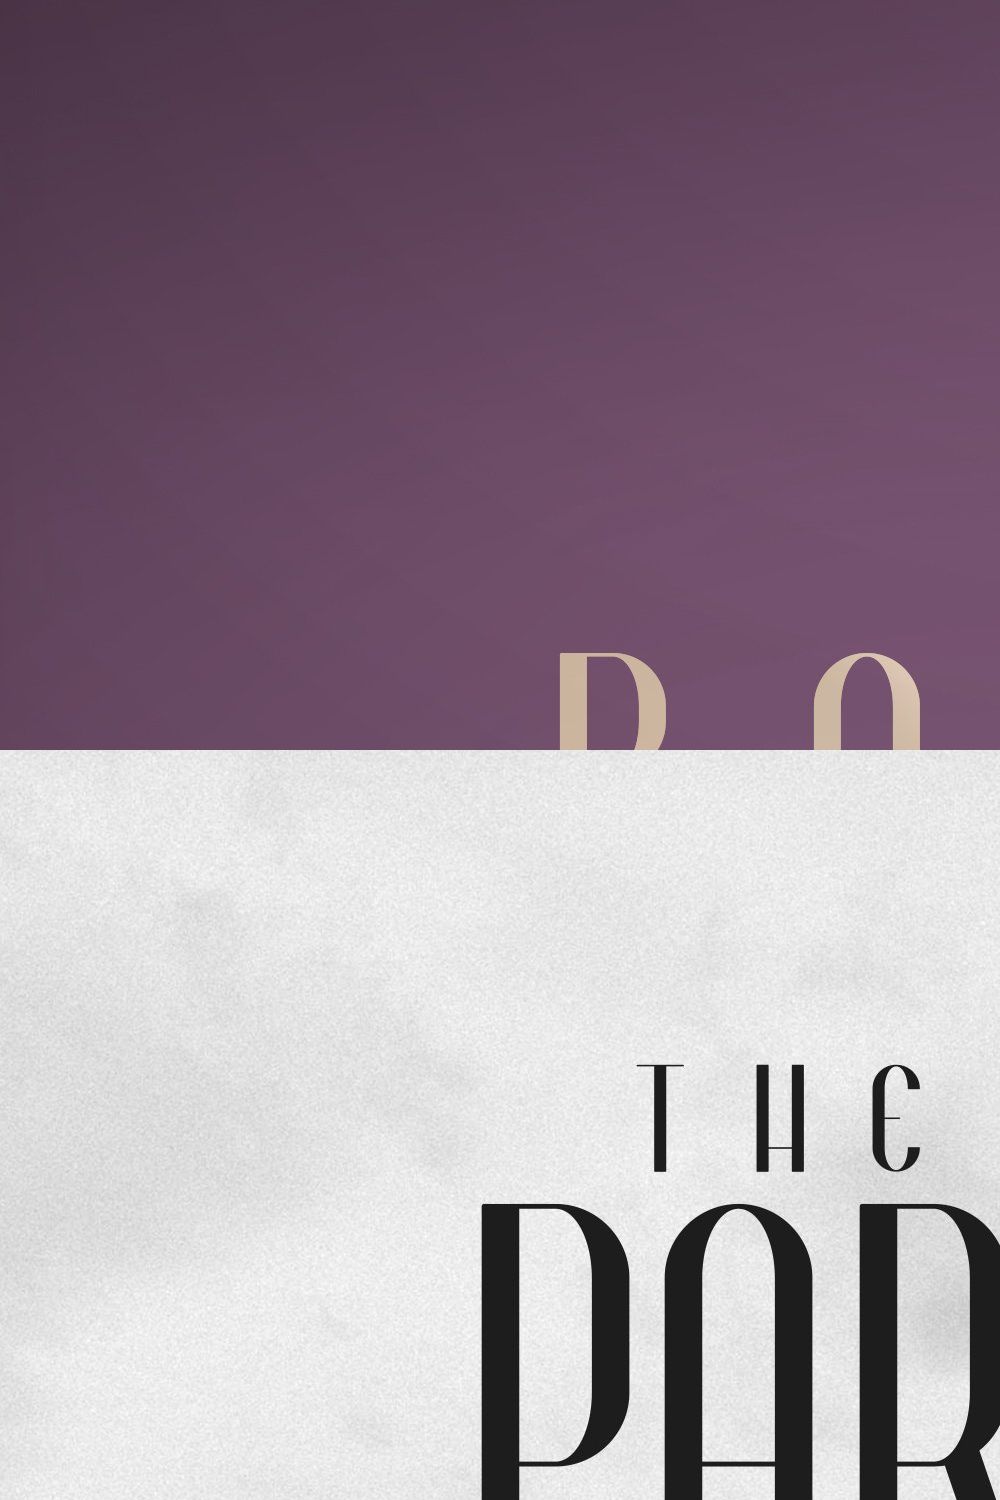 Bohem - Display font | 2 styles pinterest preview image.